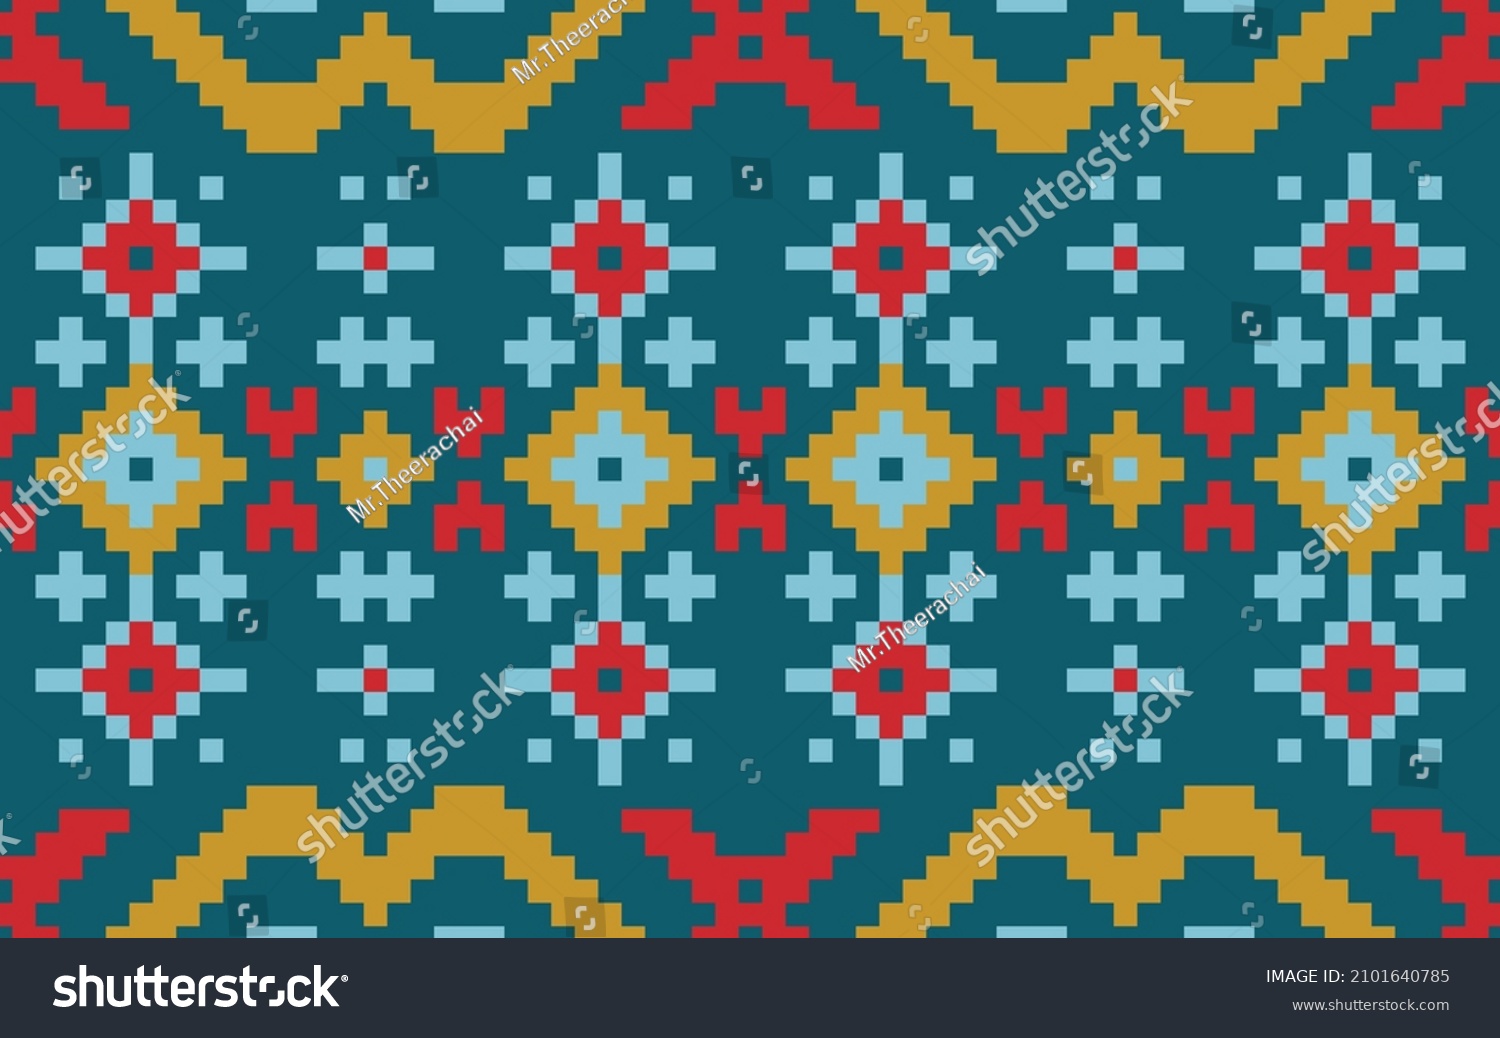 Tribal Pixel Pattern Wallpaper Wrapping Batik Stock Vector (Royalty ...